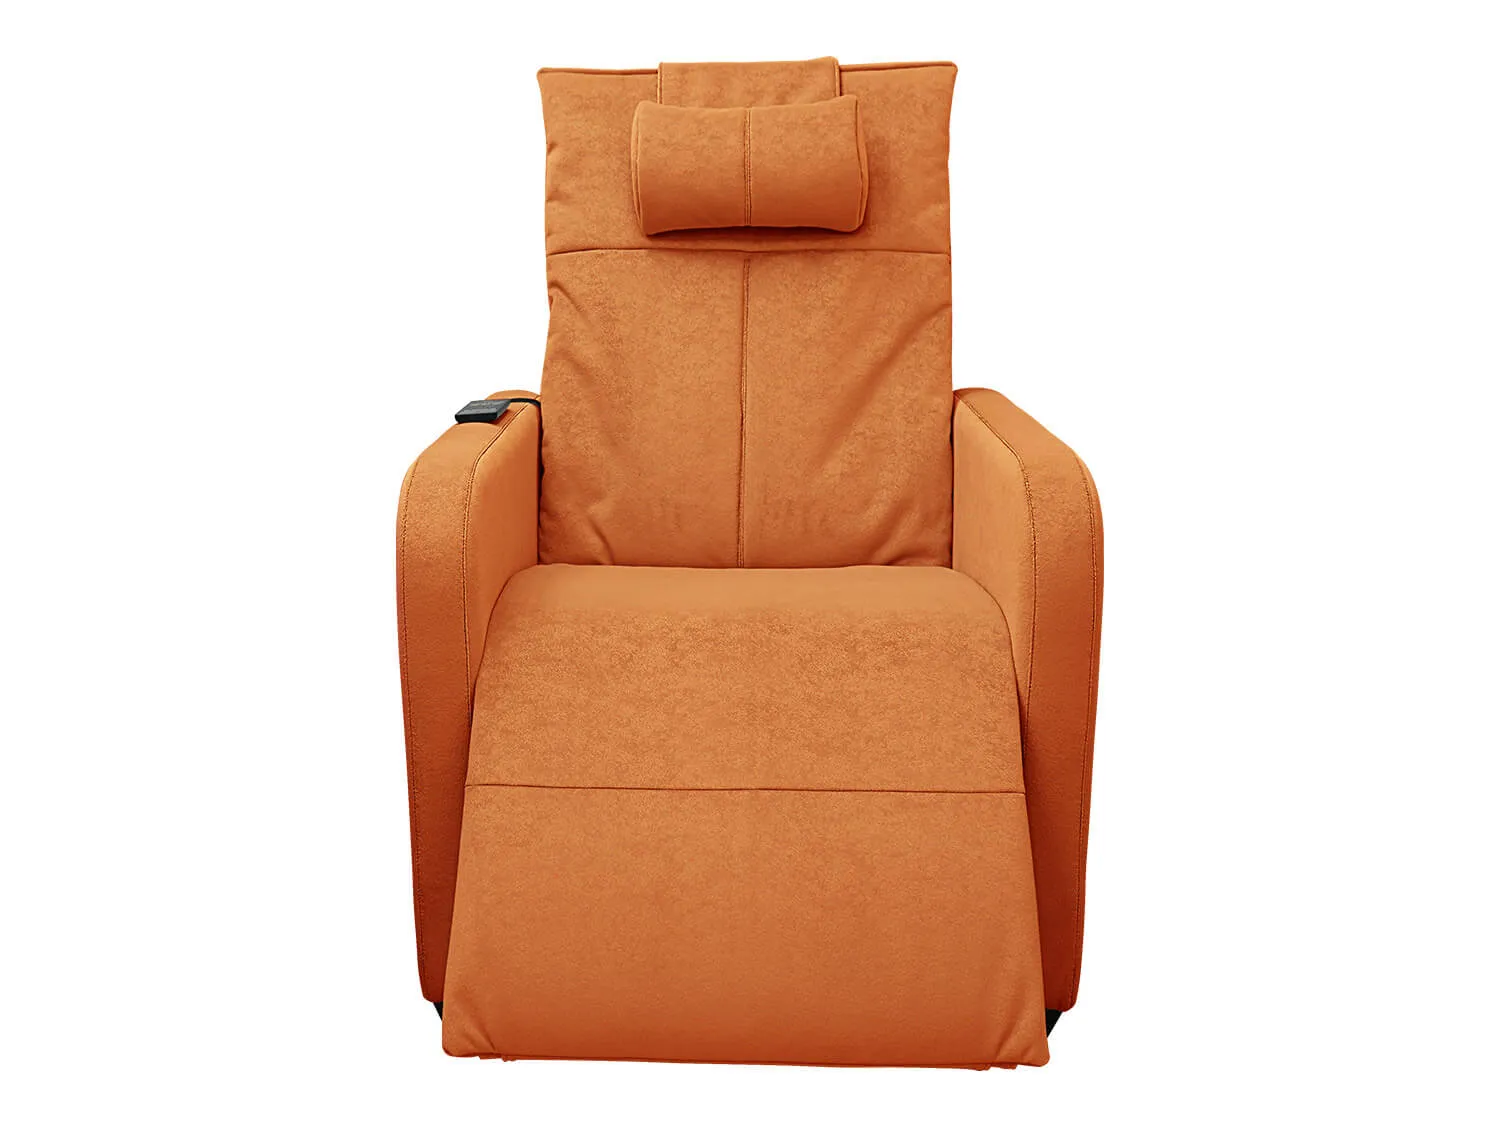 Массажное кресло реклайнер с подъемом FUJIMO LIFT CHAIR F3005 FLFL цвет на заказ